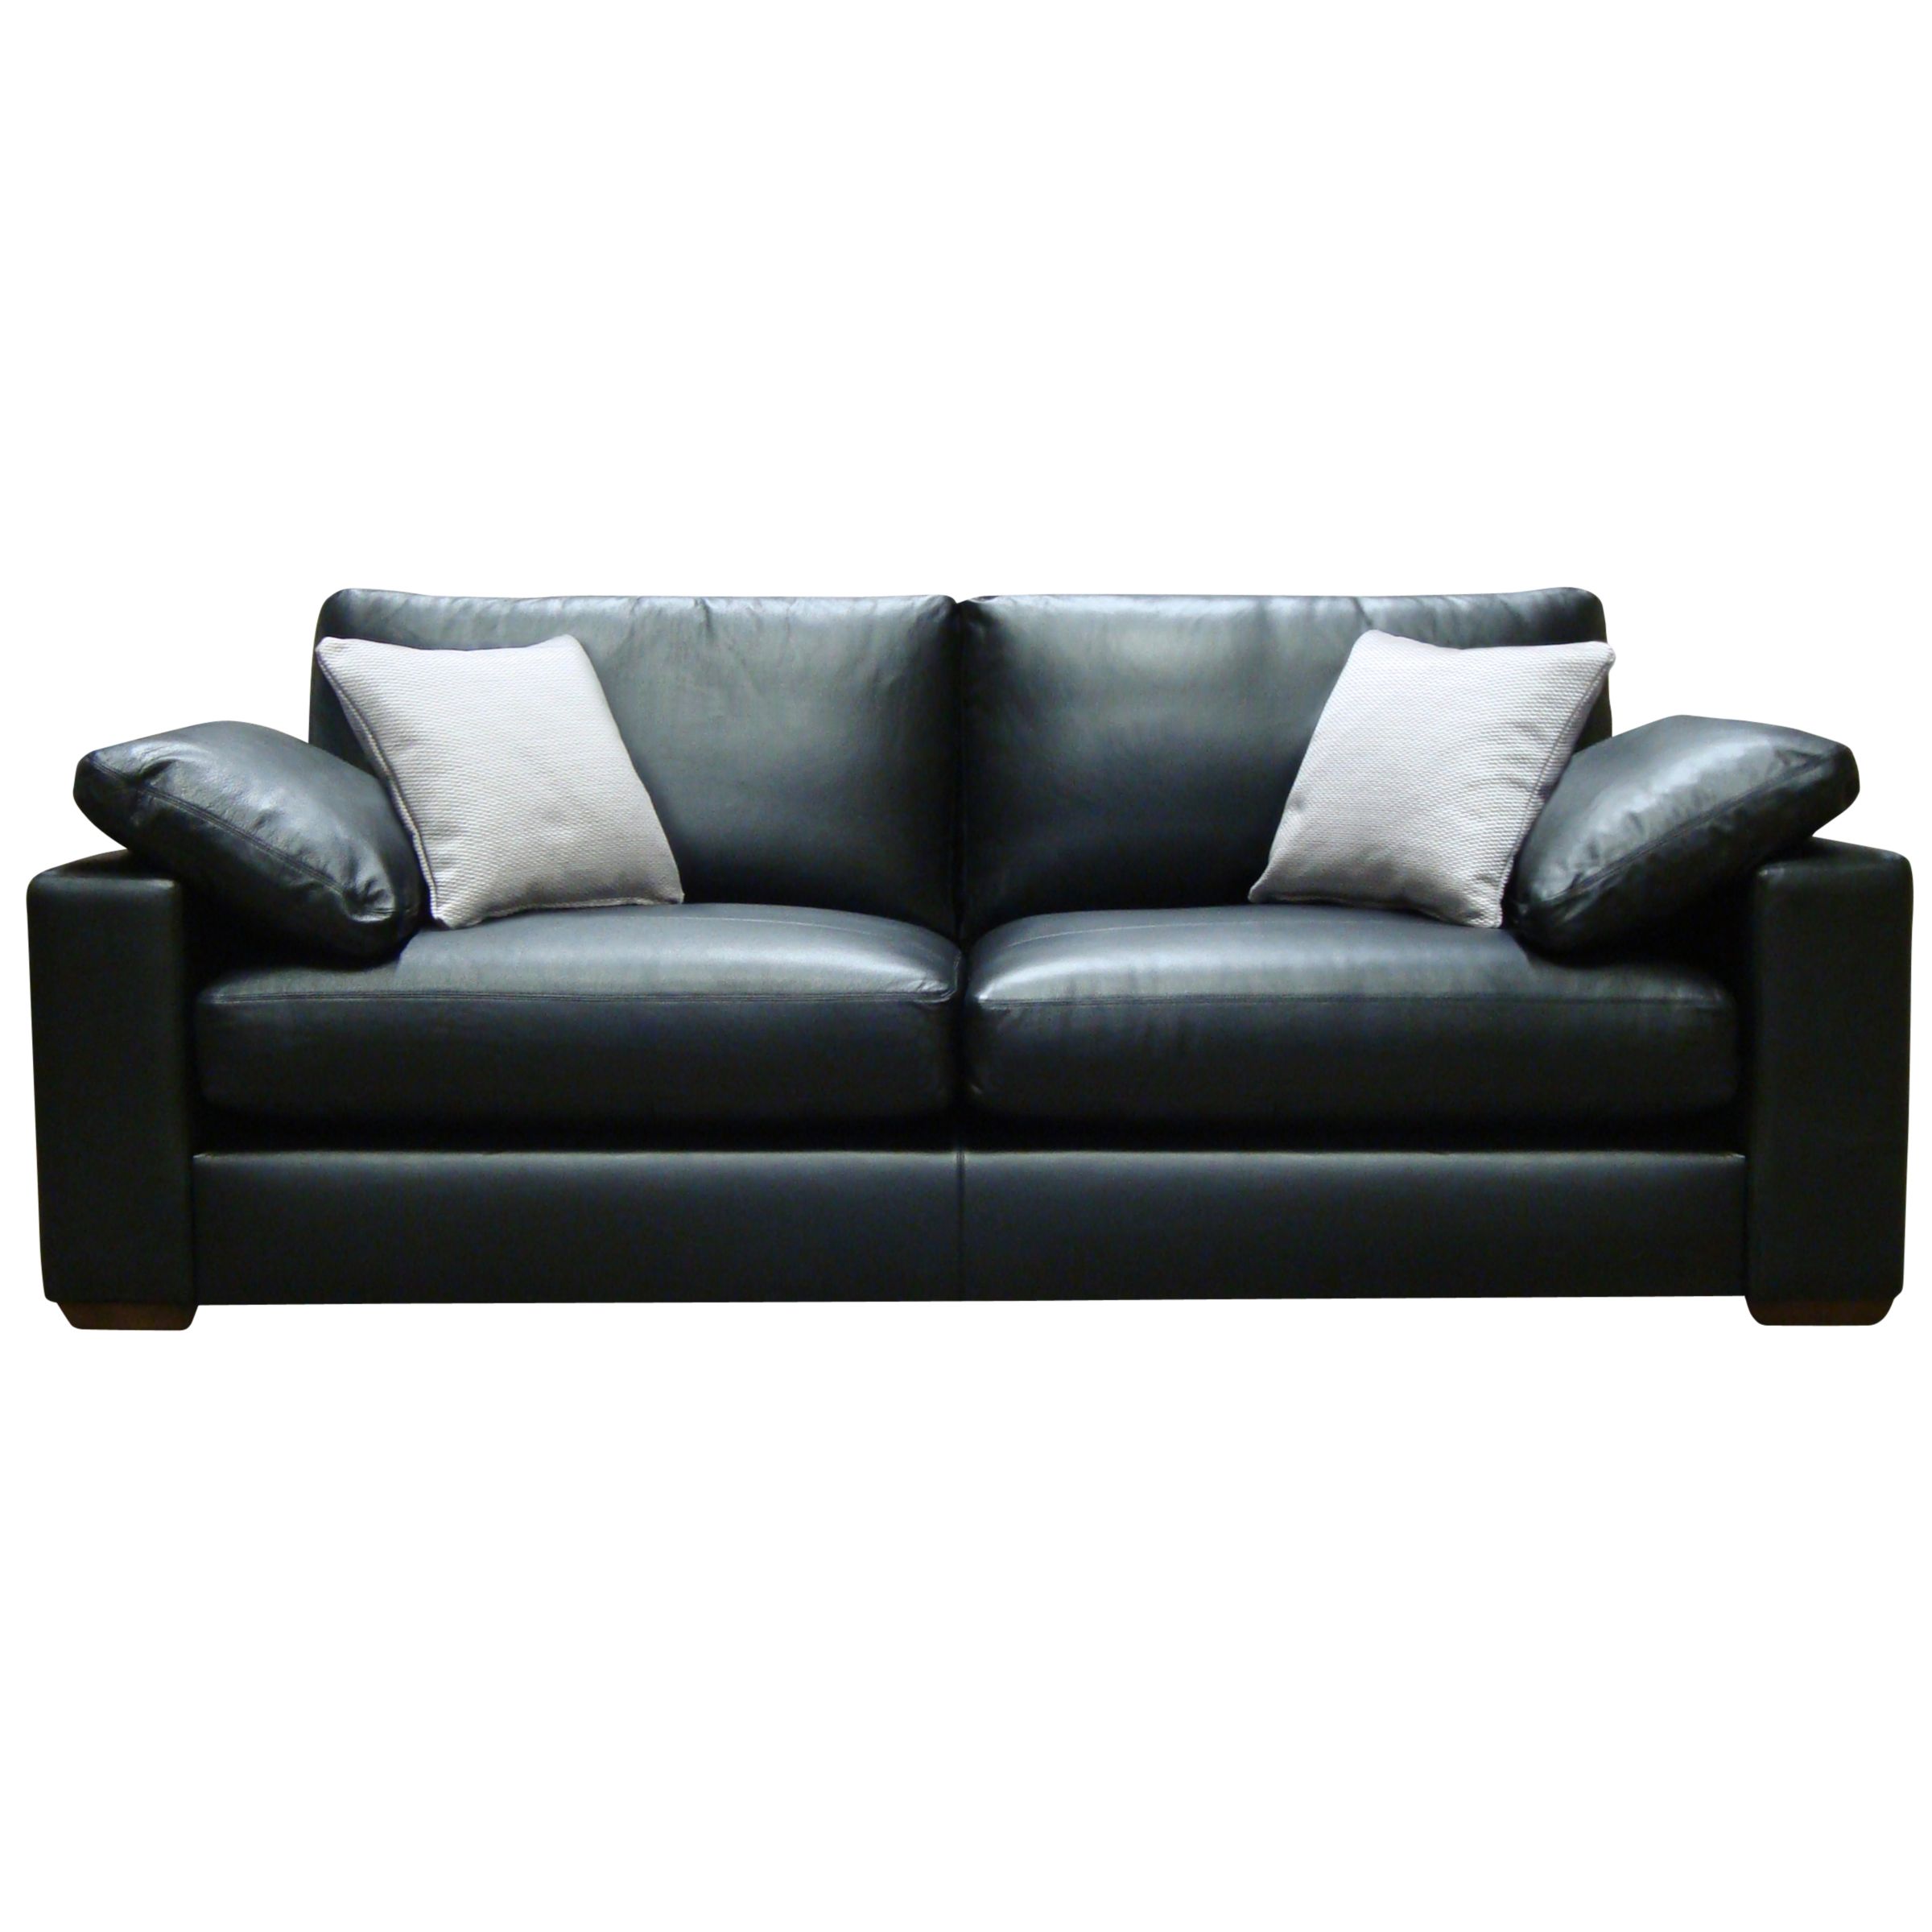 John Lewis Options Wide Arm Grand Sofa, Model 26, Veneto Black at John Lewis